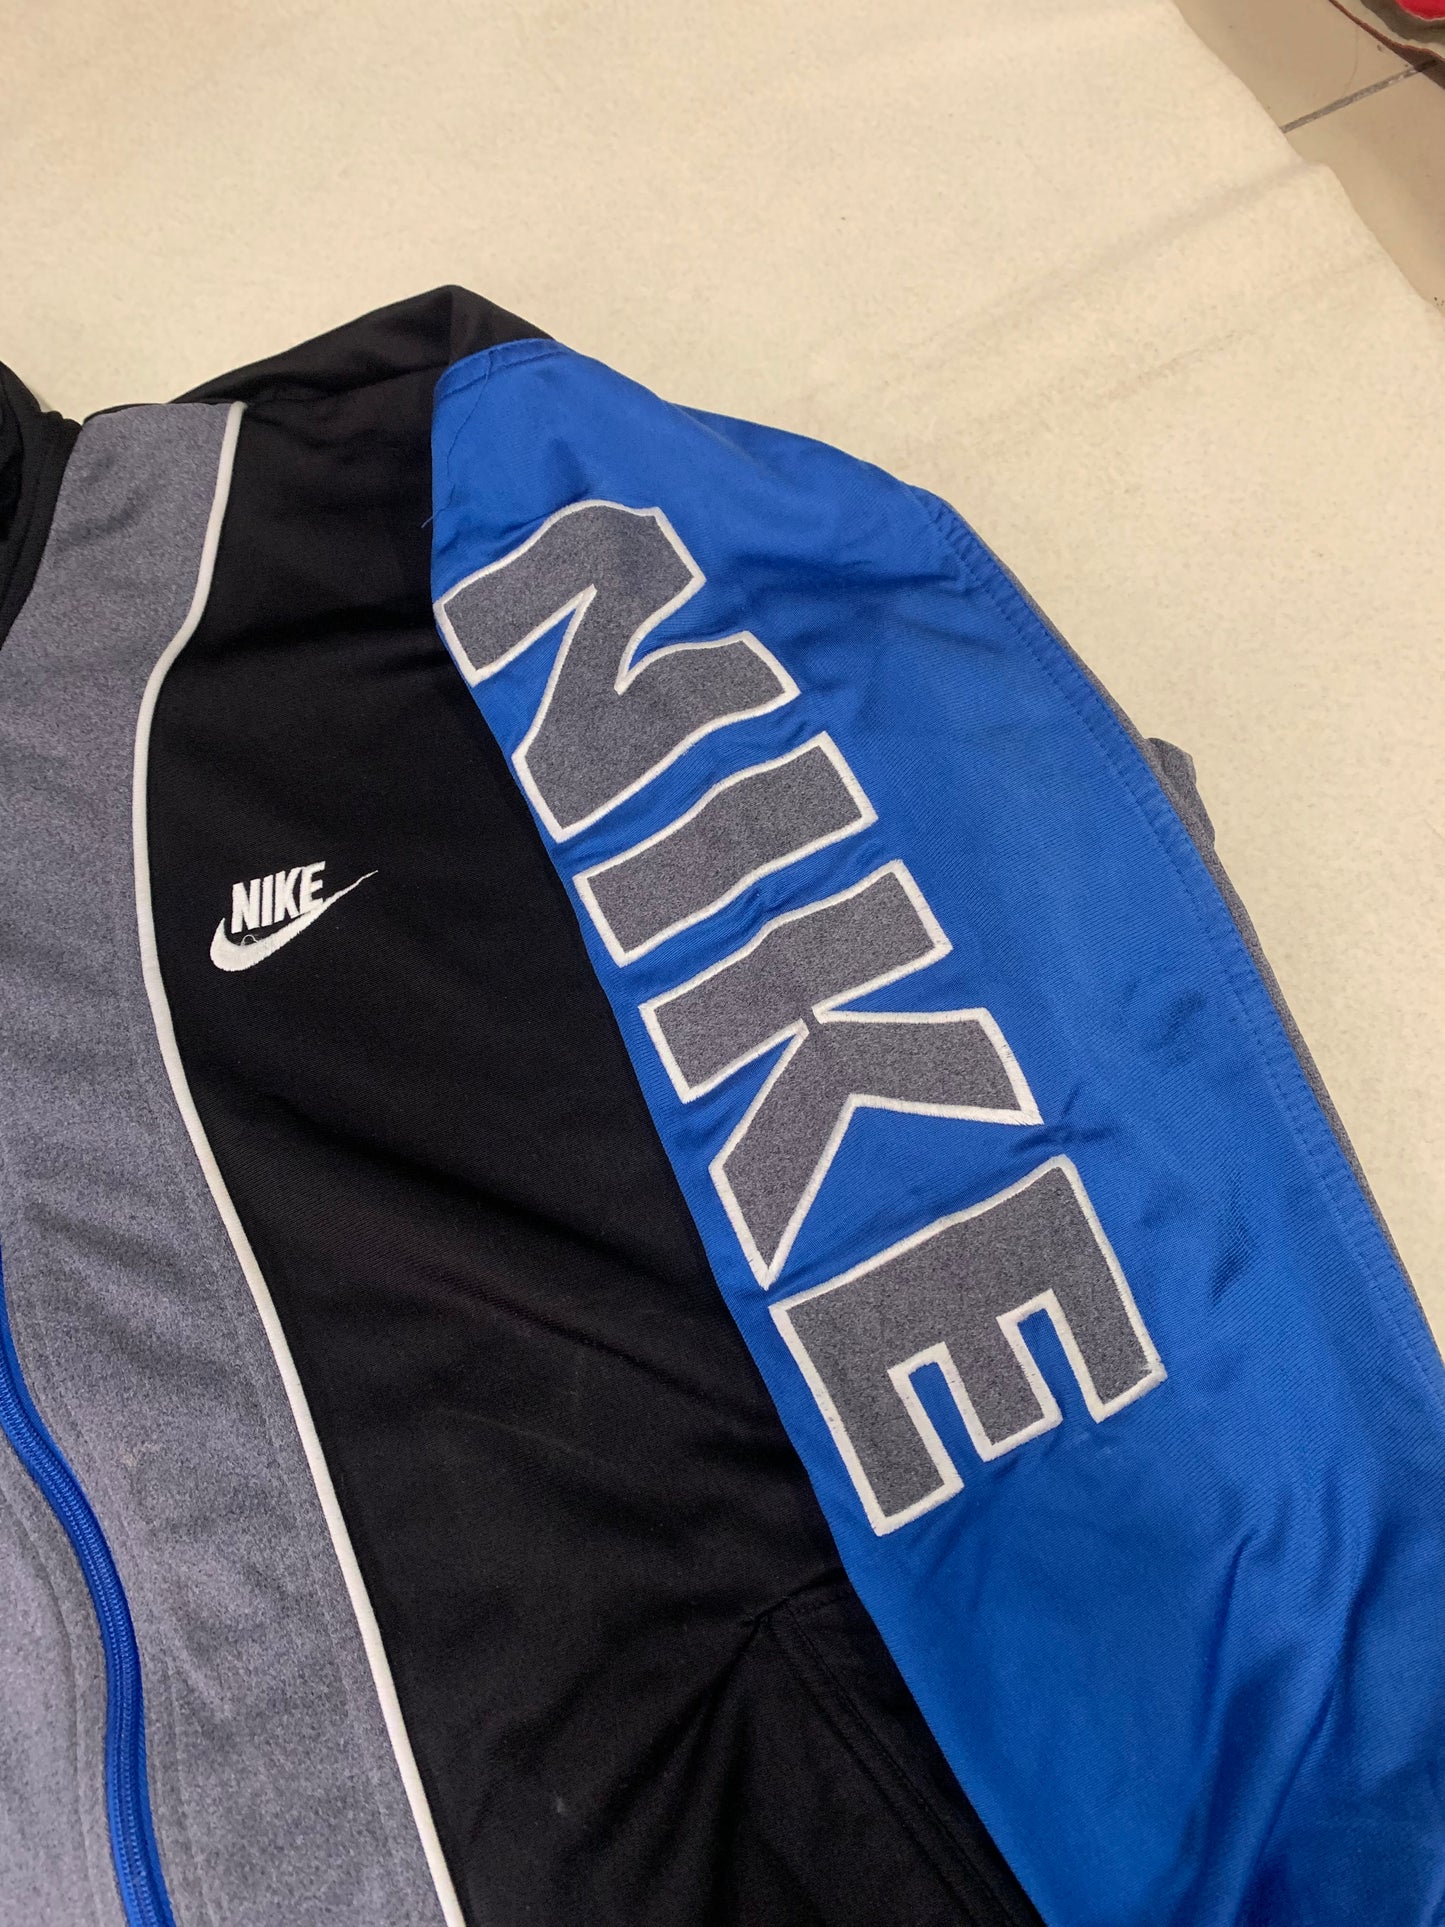 Vintage Nike 90's Jacket - Xl